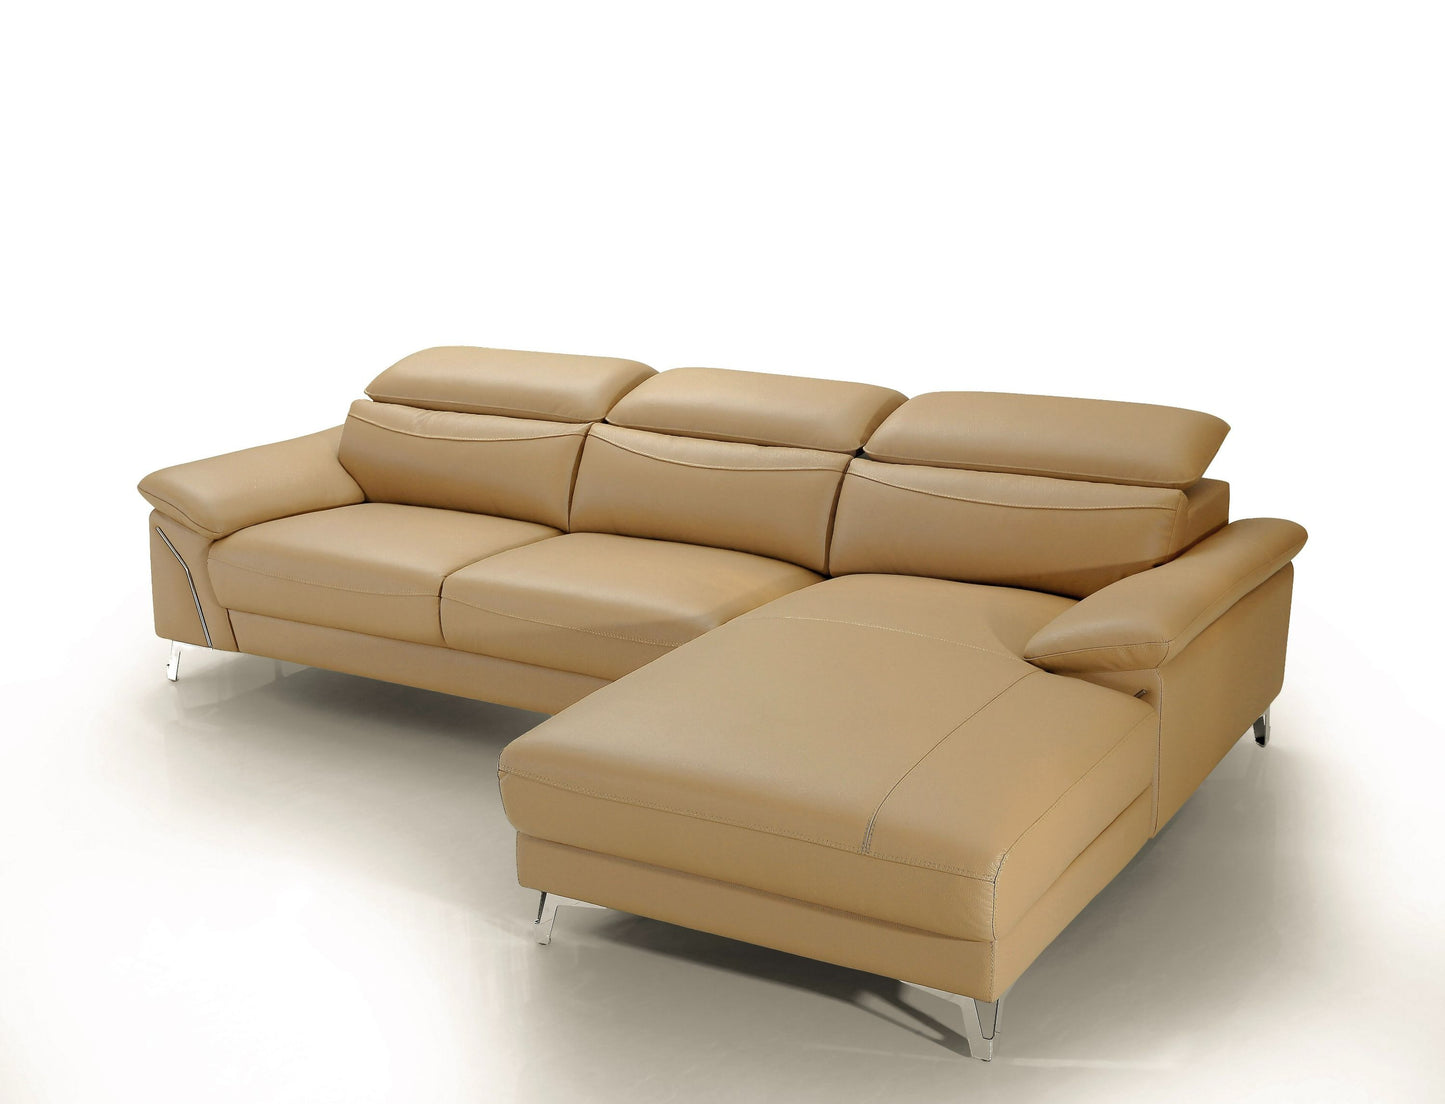 Divani Casa Sura - Modern Camel Leather Right Facing Sectional Sofa